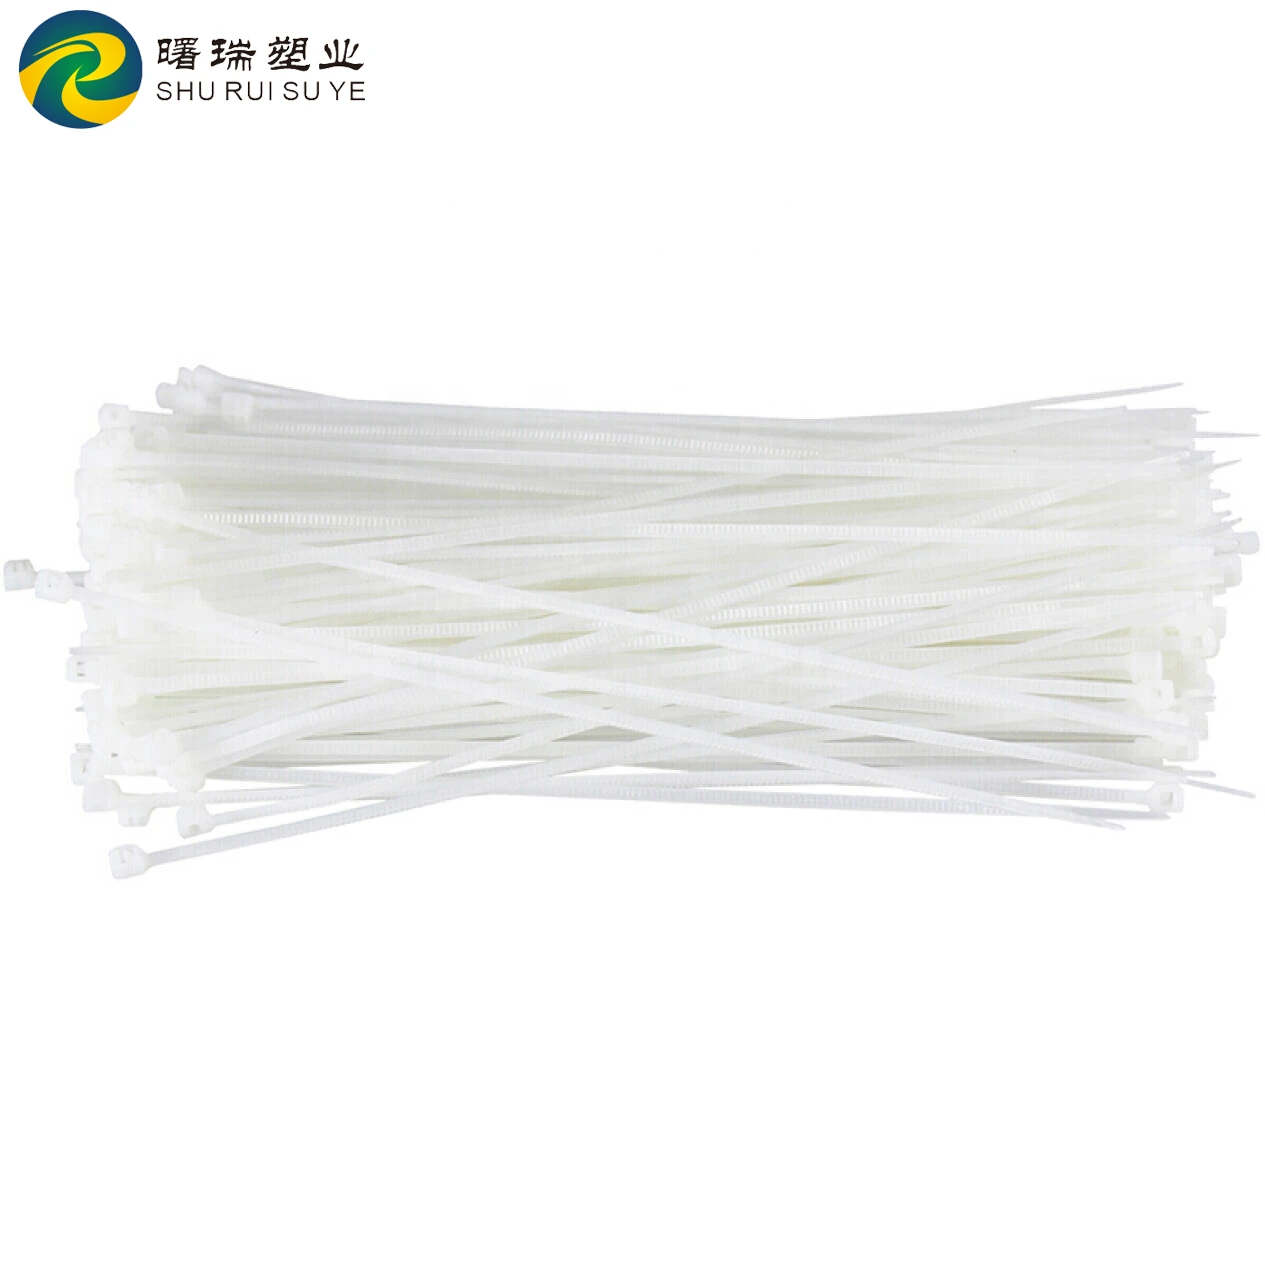 Customized Plastic Zip Tie Self-Locking Cable Tie